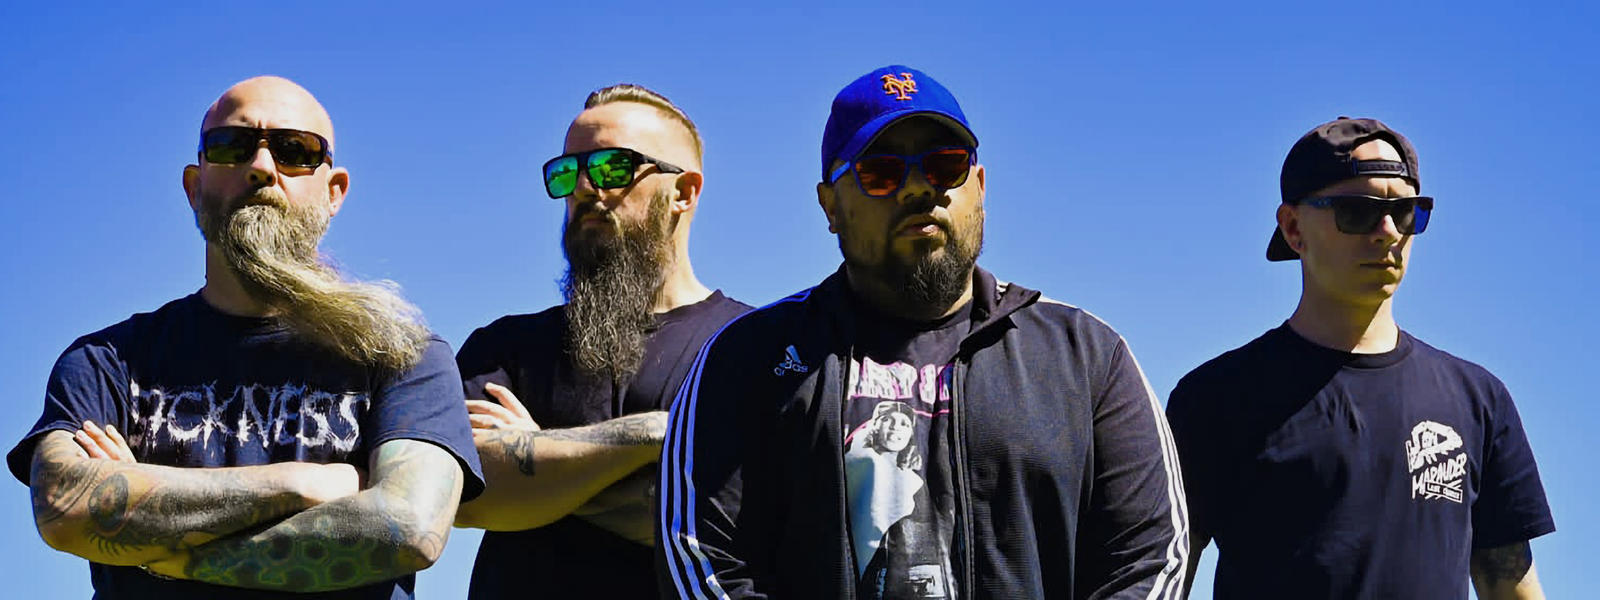 Adelaide Metal Band Unleash Debut Album